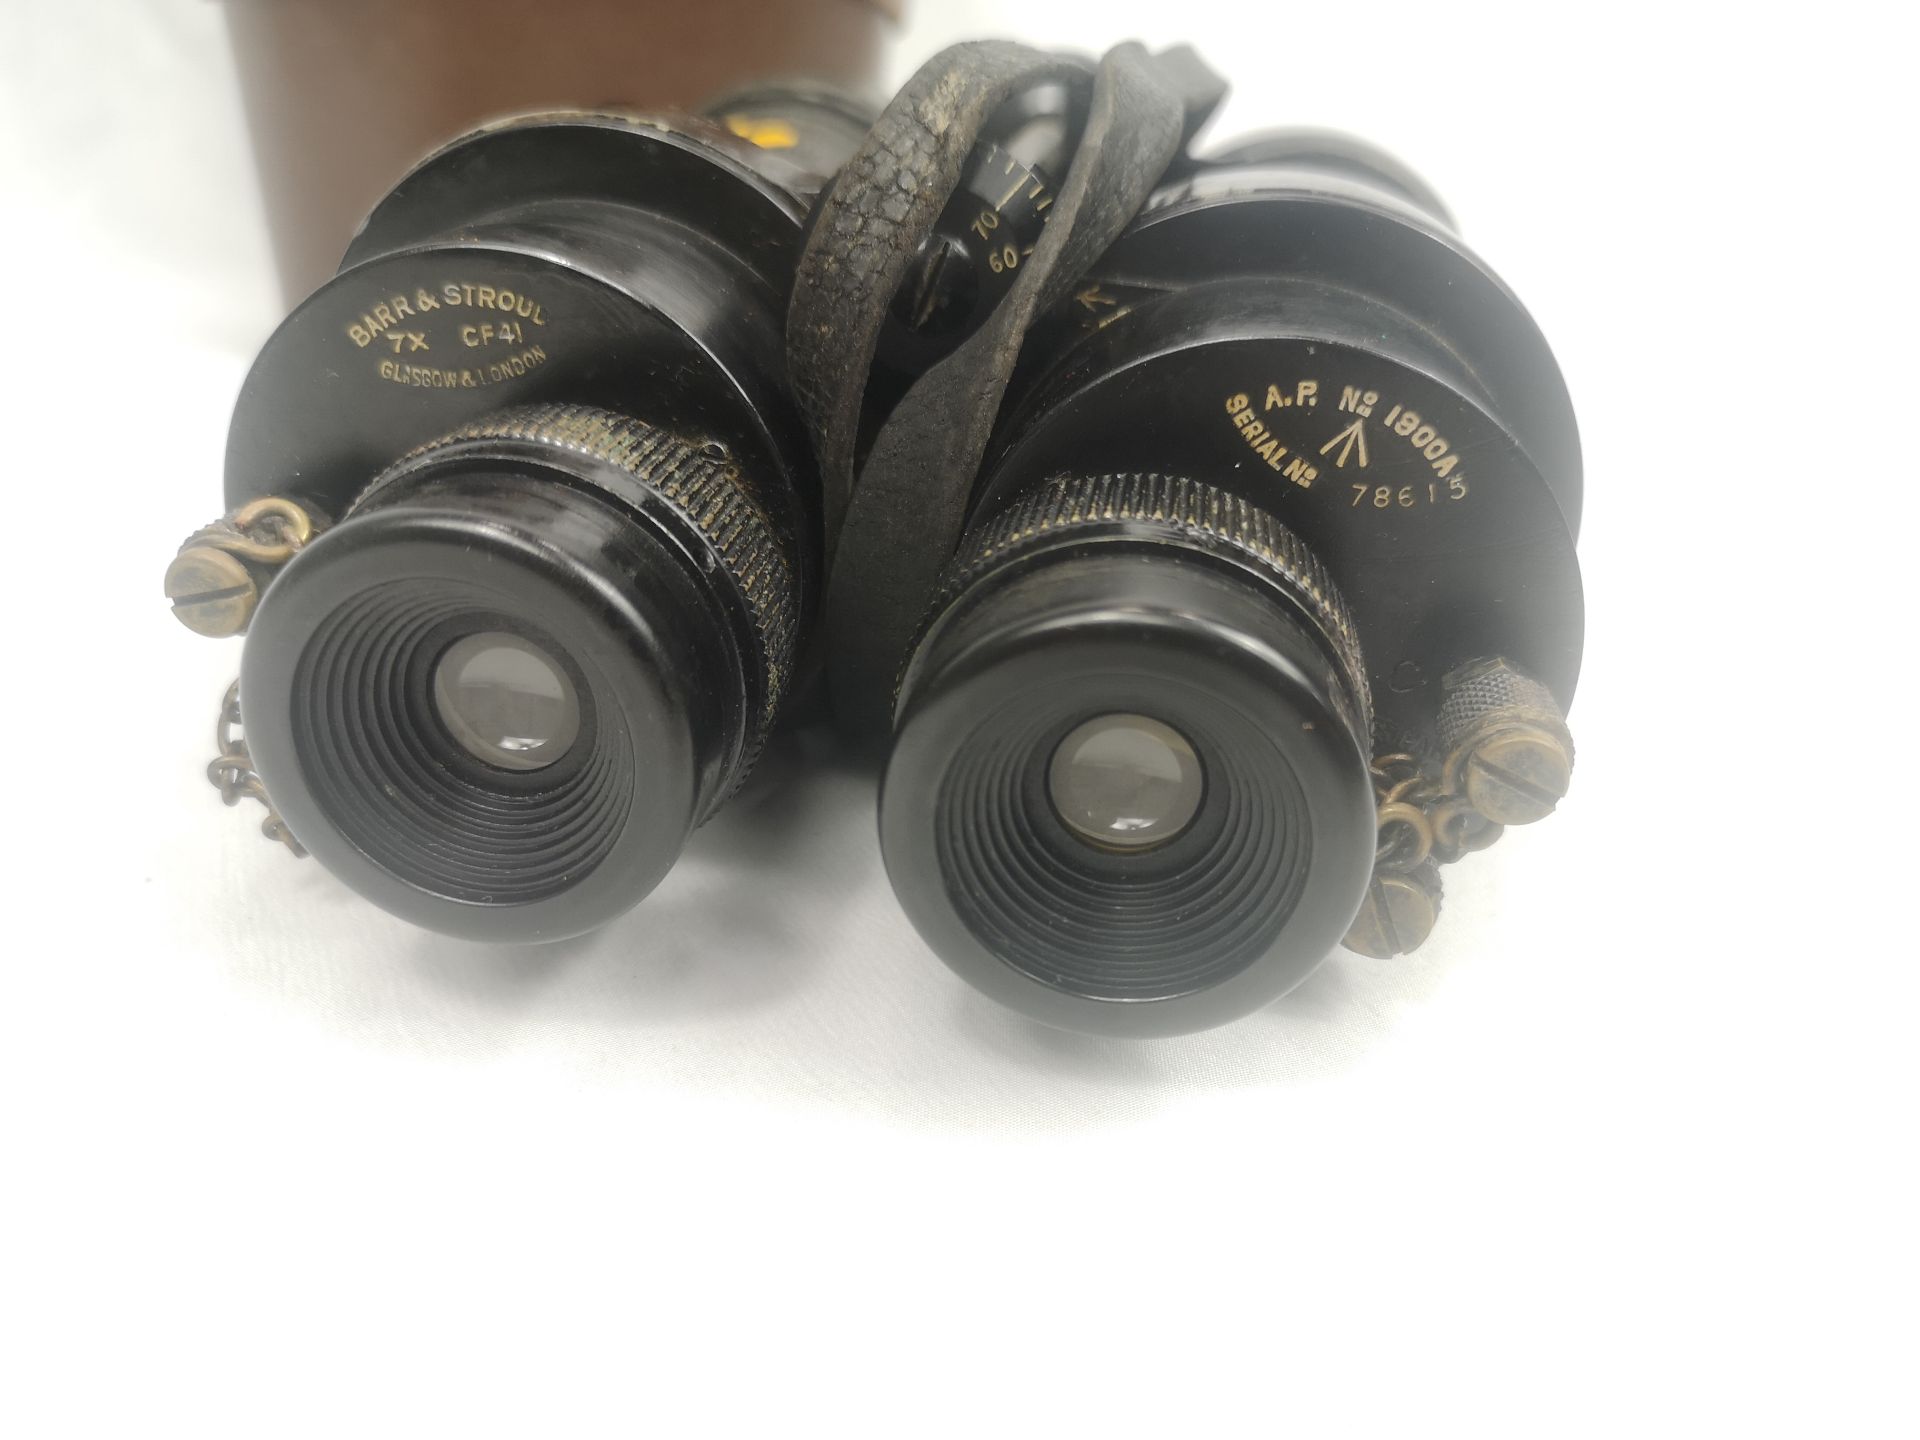 Pair of Barr and Stroud 7x binoculars - Image 5 of 5